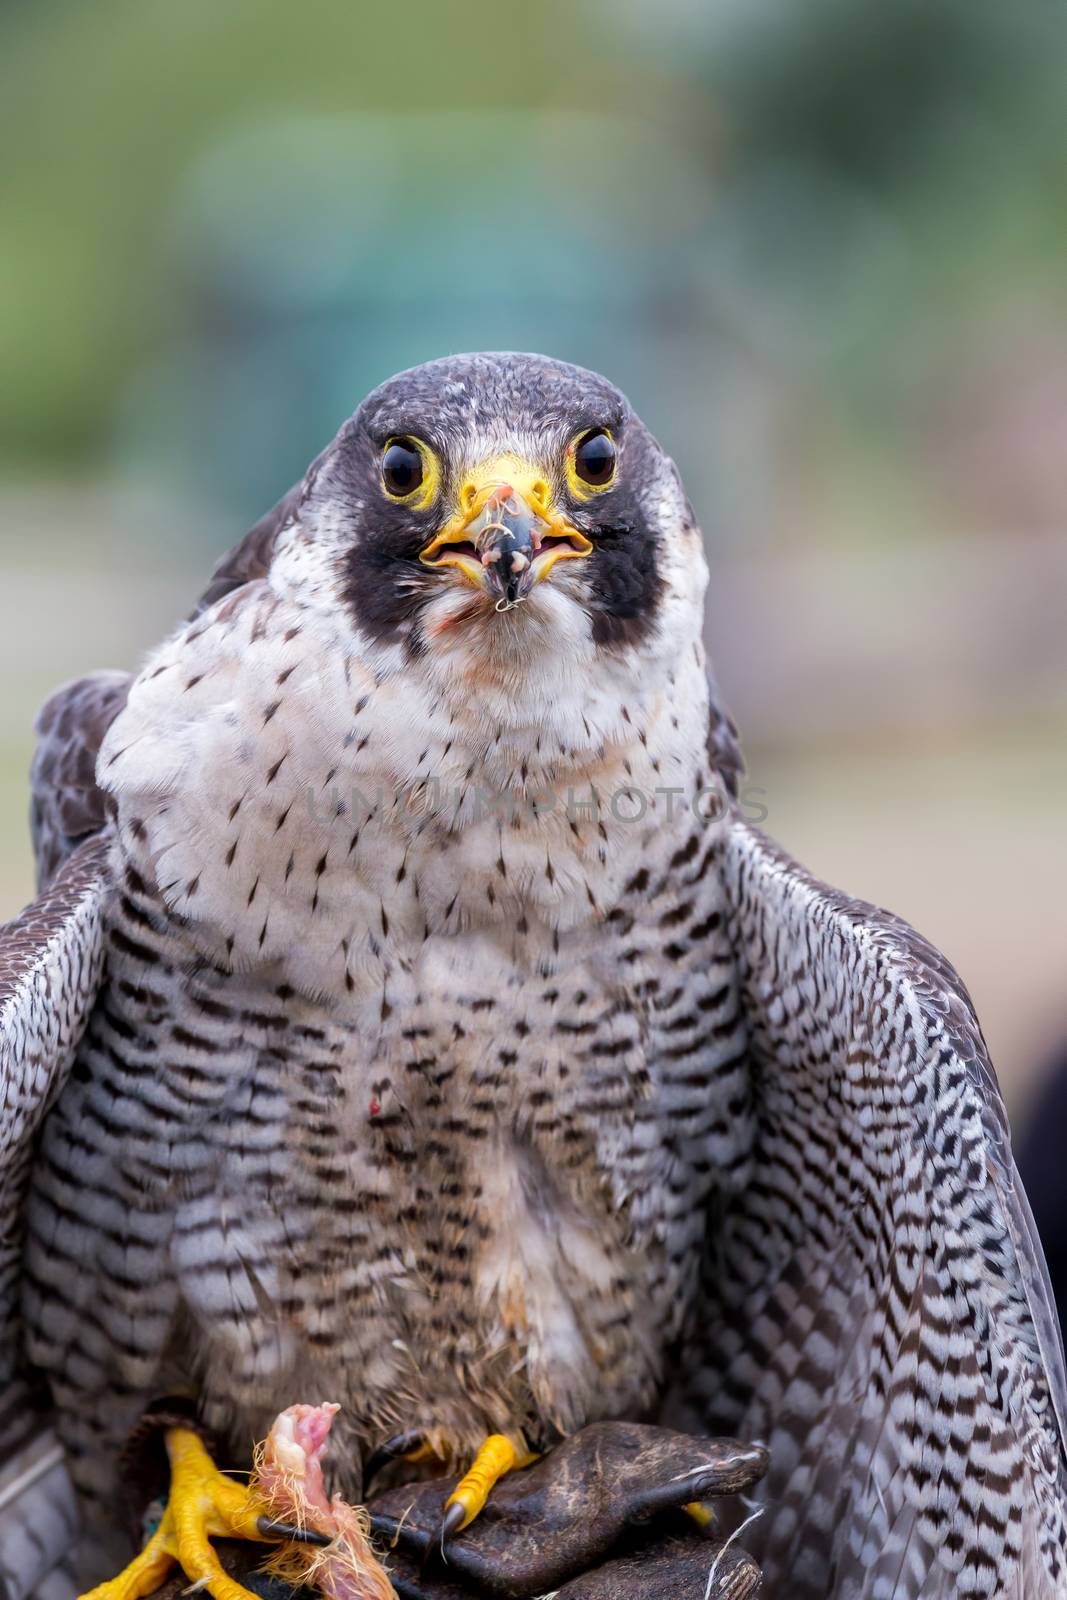 Peregrine Falcon (Falco peregrinus). These birds are the fastest animals in the world.